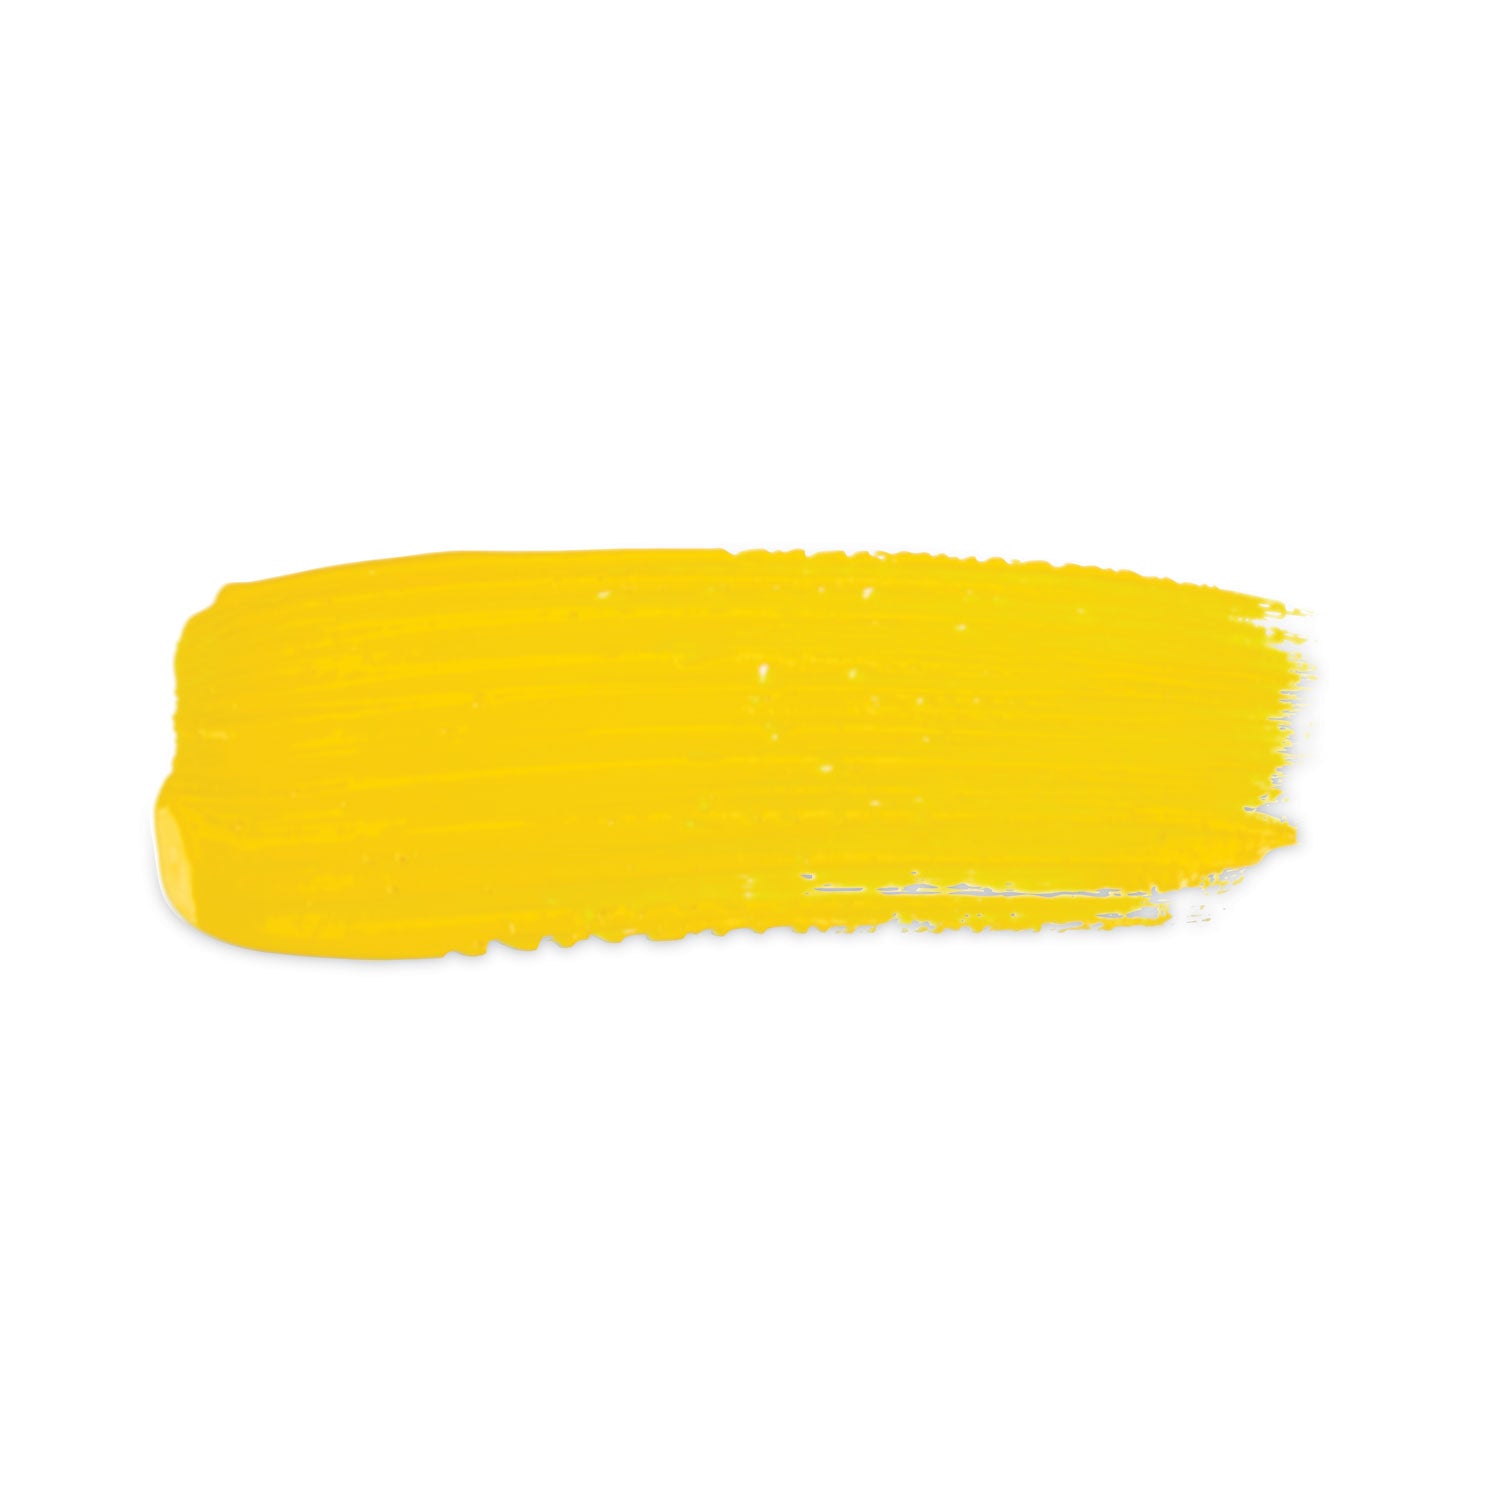 Crayola Portfolio Series Acrylic Paint - 16 fl oz - 1 Each - Brilliant Yellow - 3